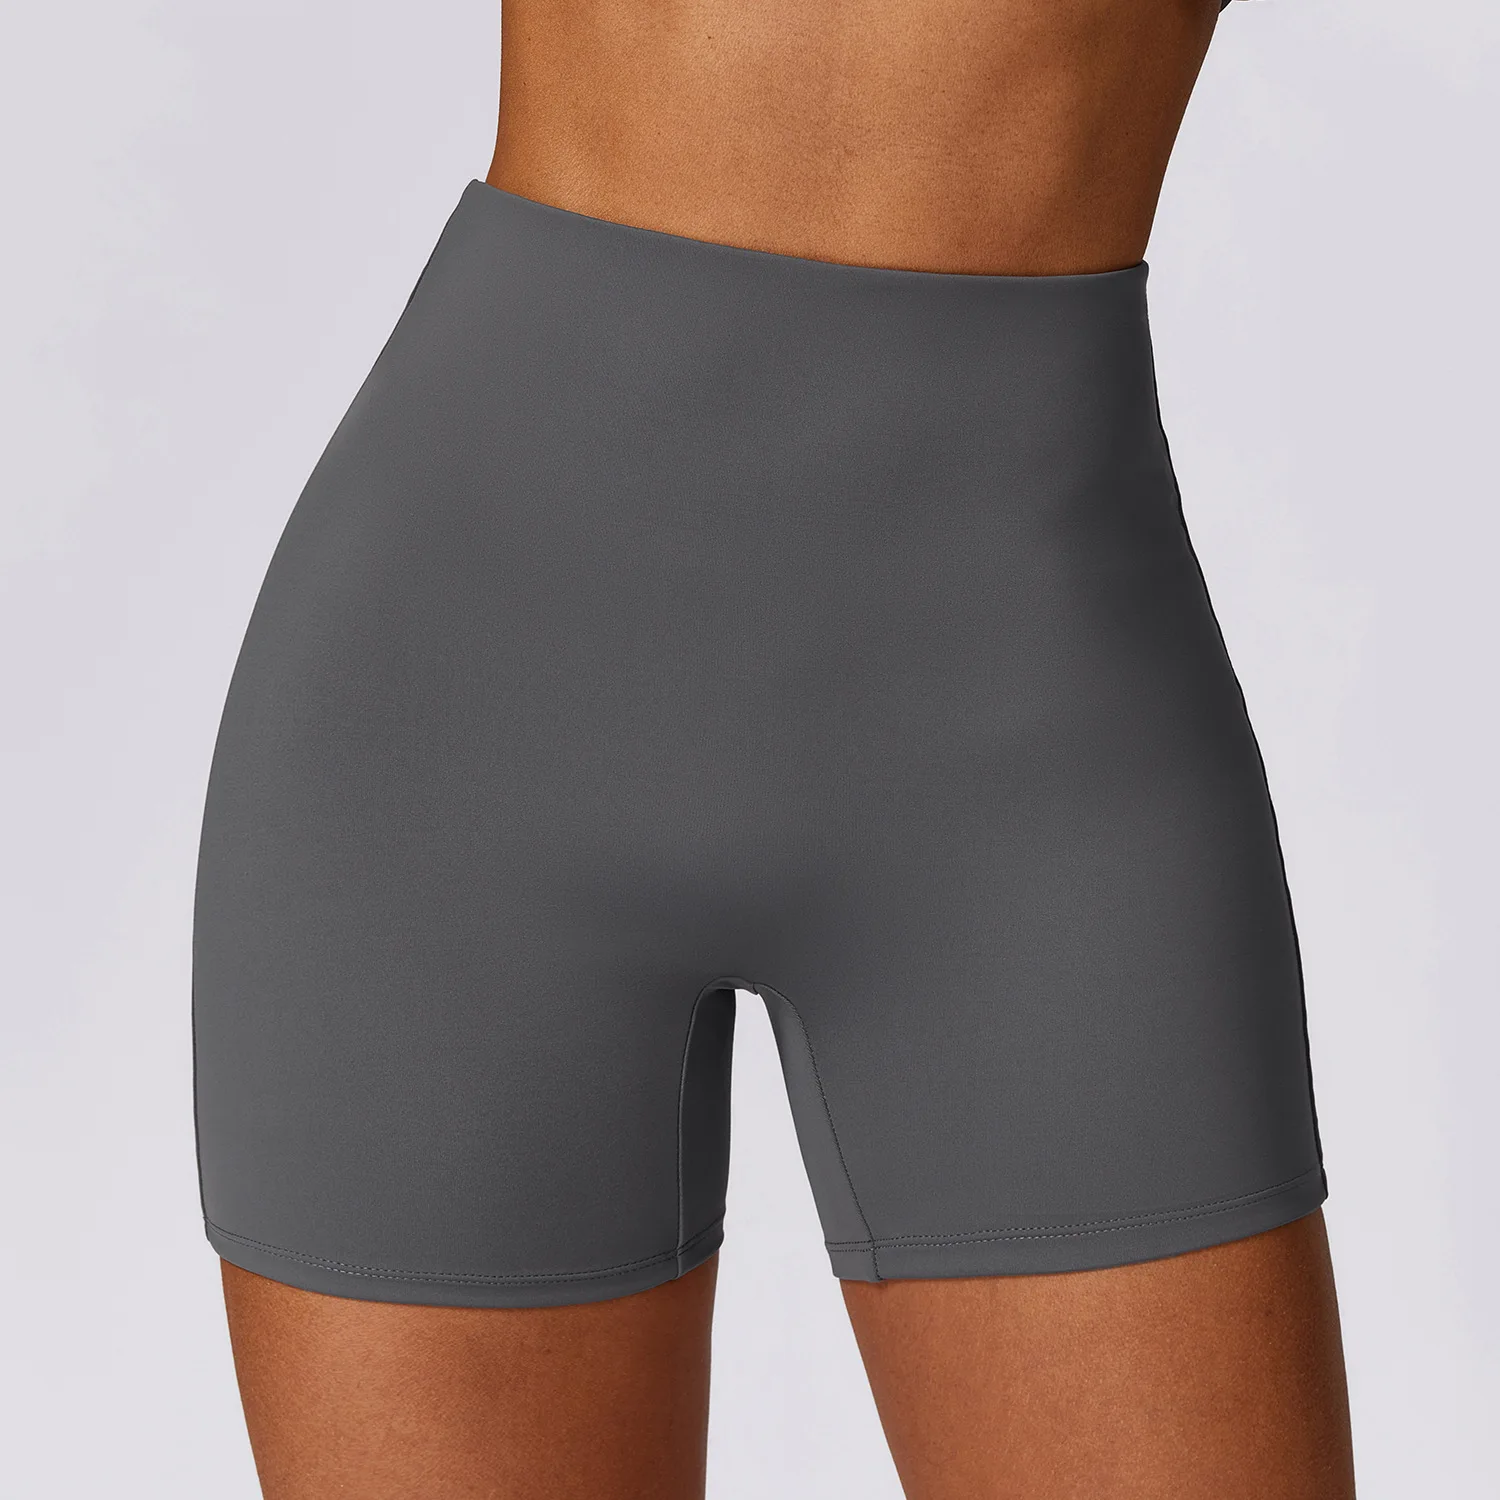 Oem Spandex High Waisted Workout Biker Shorts Gym Sportswear Women Fitness Clothings Active Sports Yoga Shorts